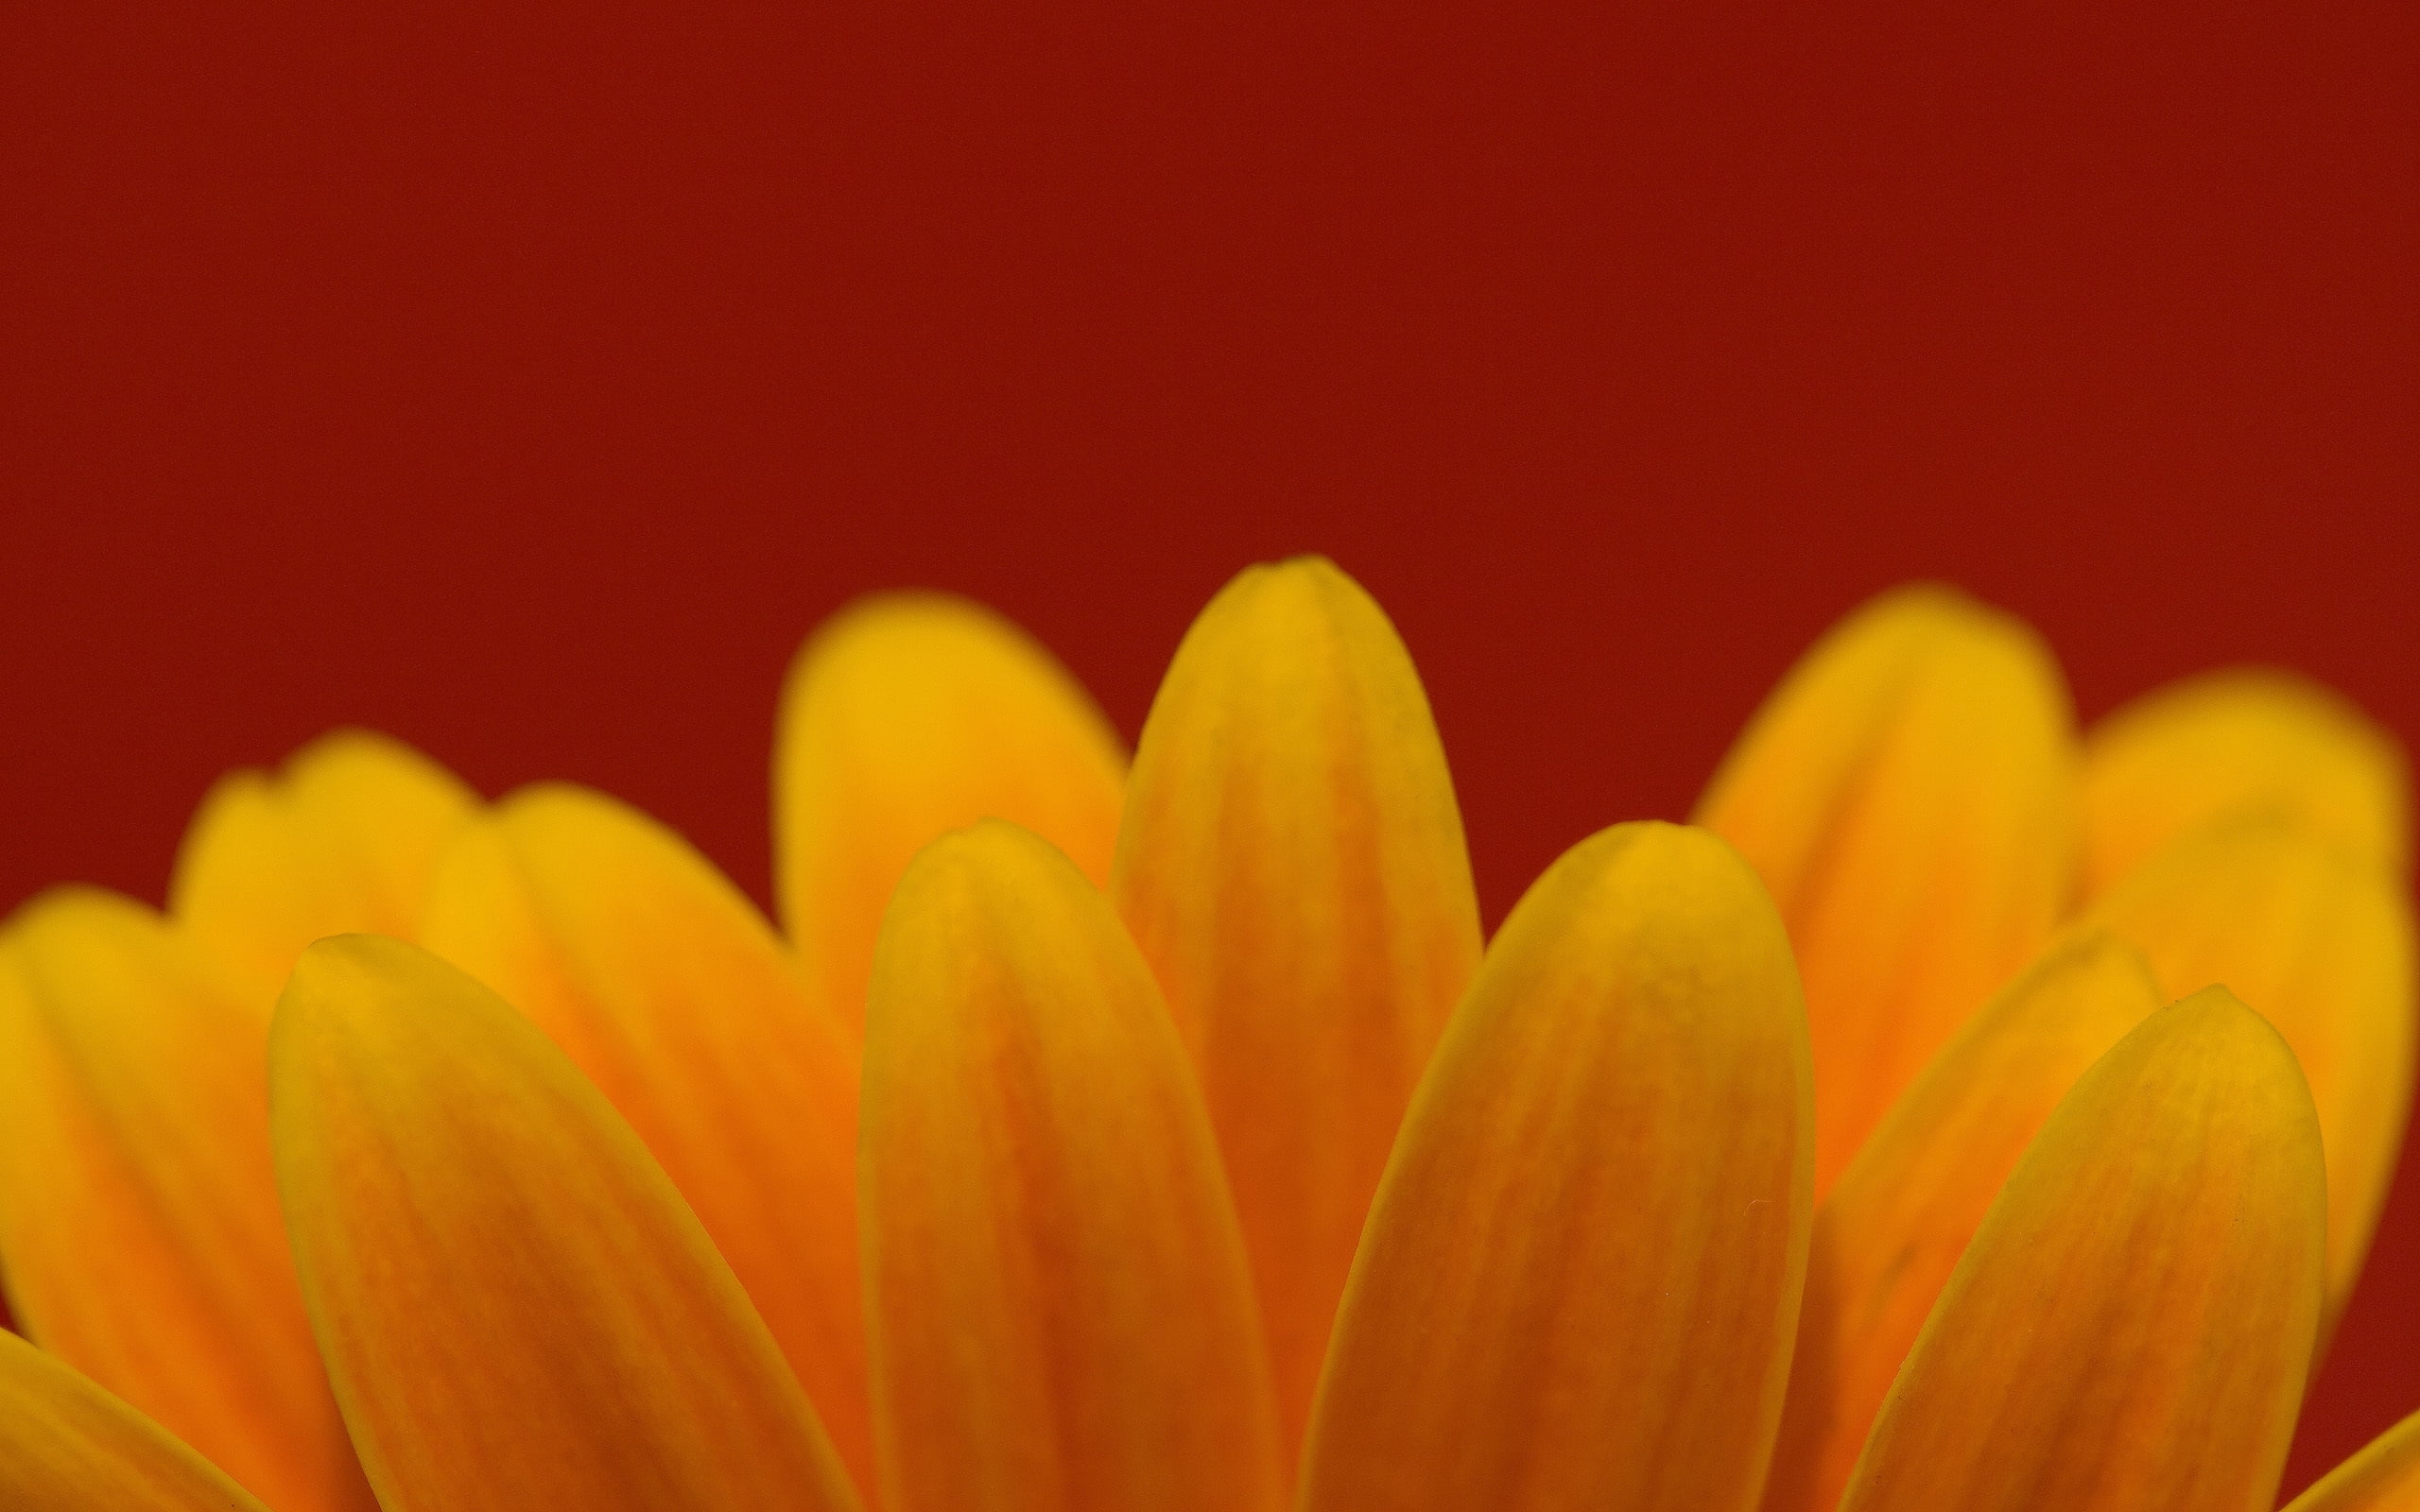 macro photography of yellow Daisy flower petals